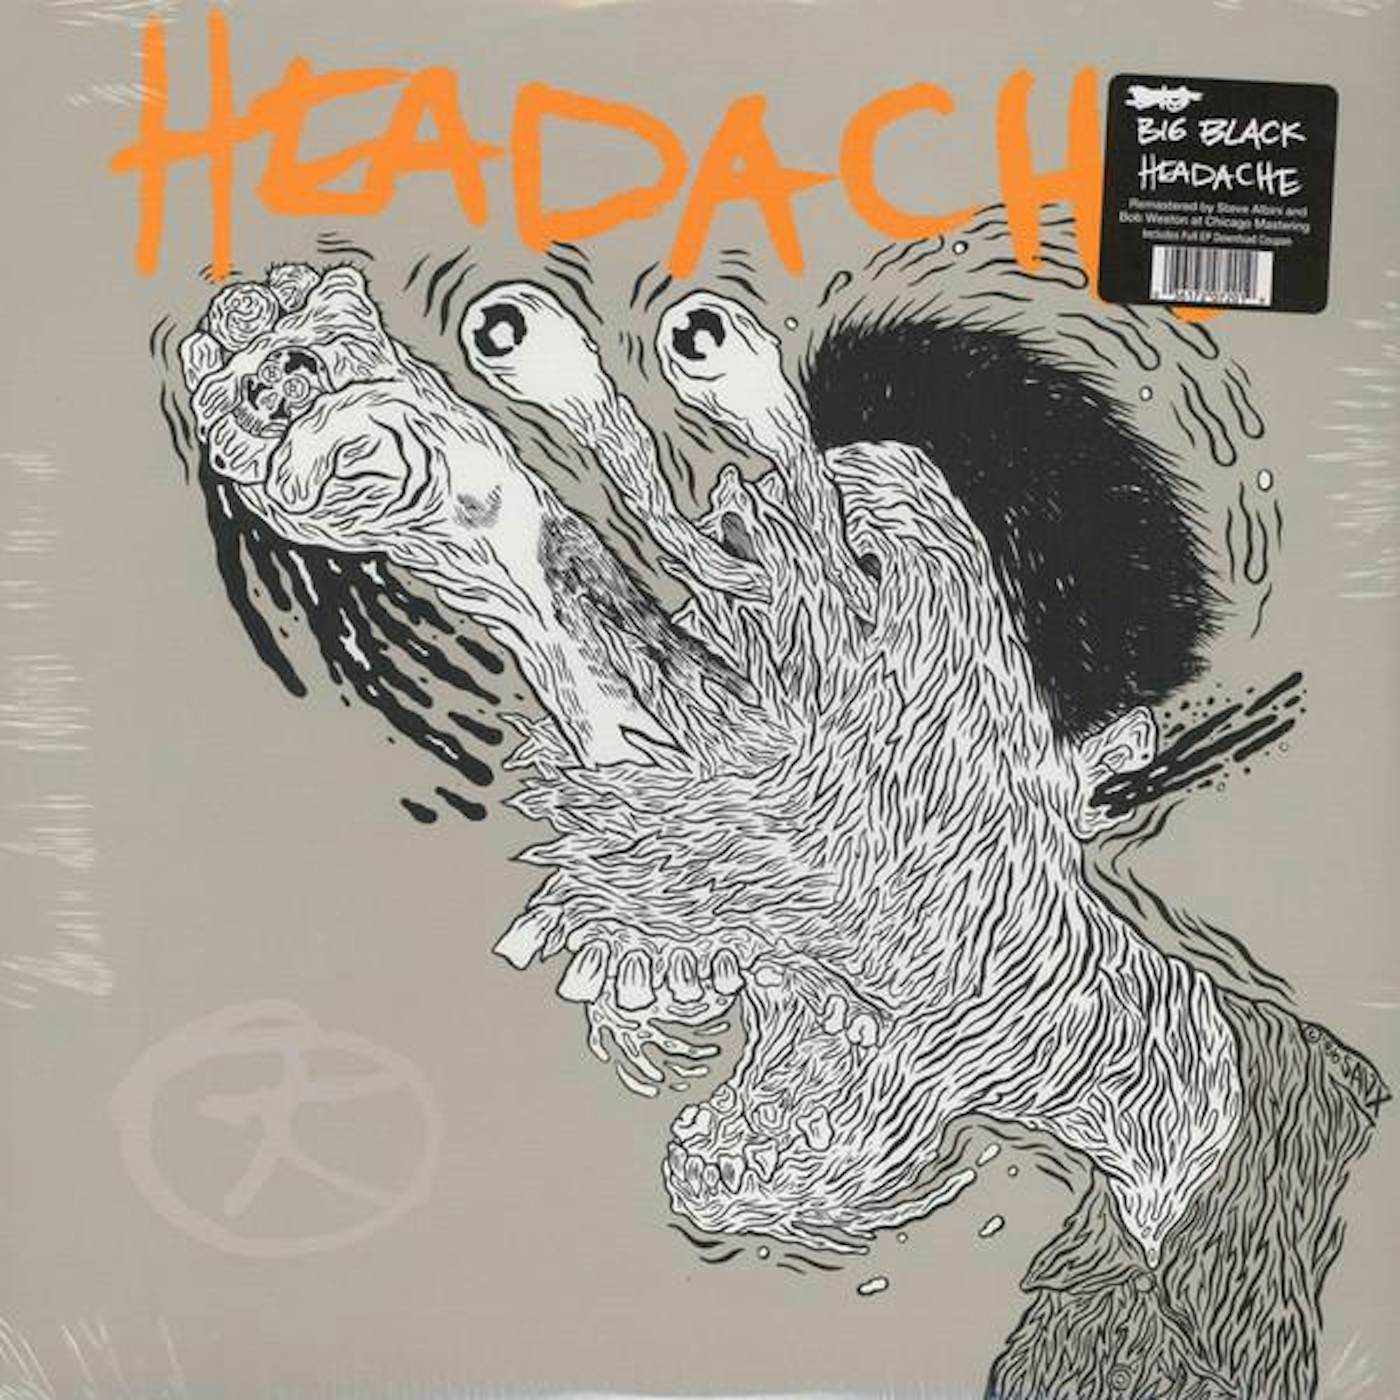 Big Black HEADACHE EP Vinyl Record